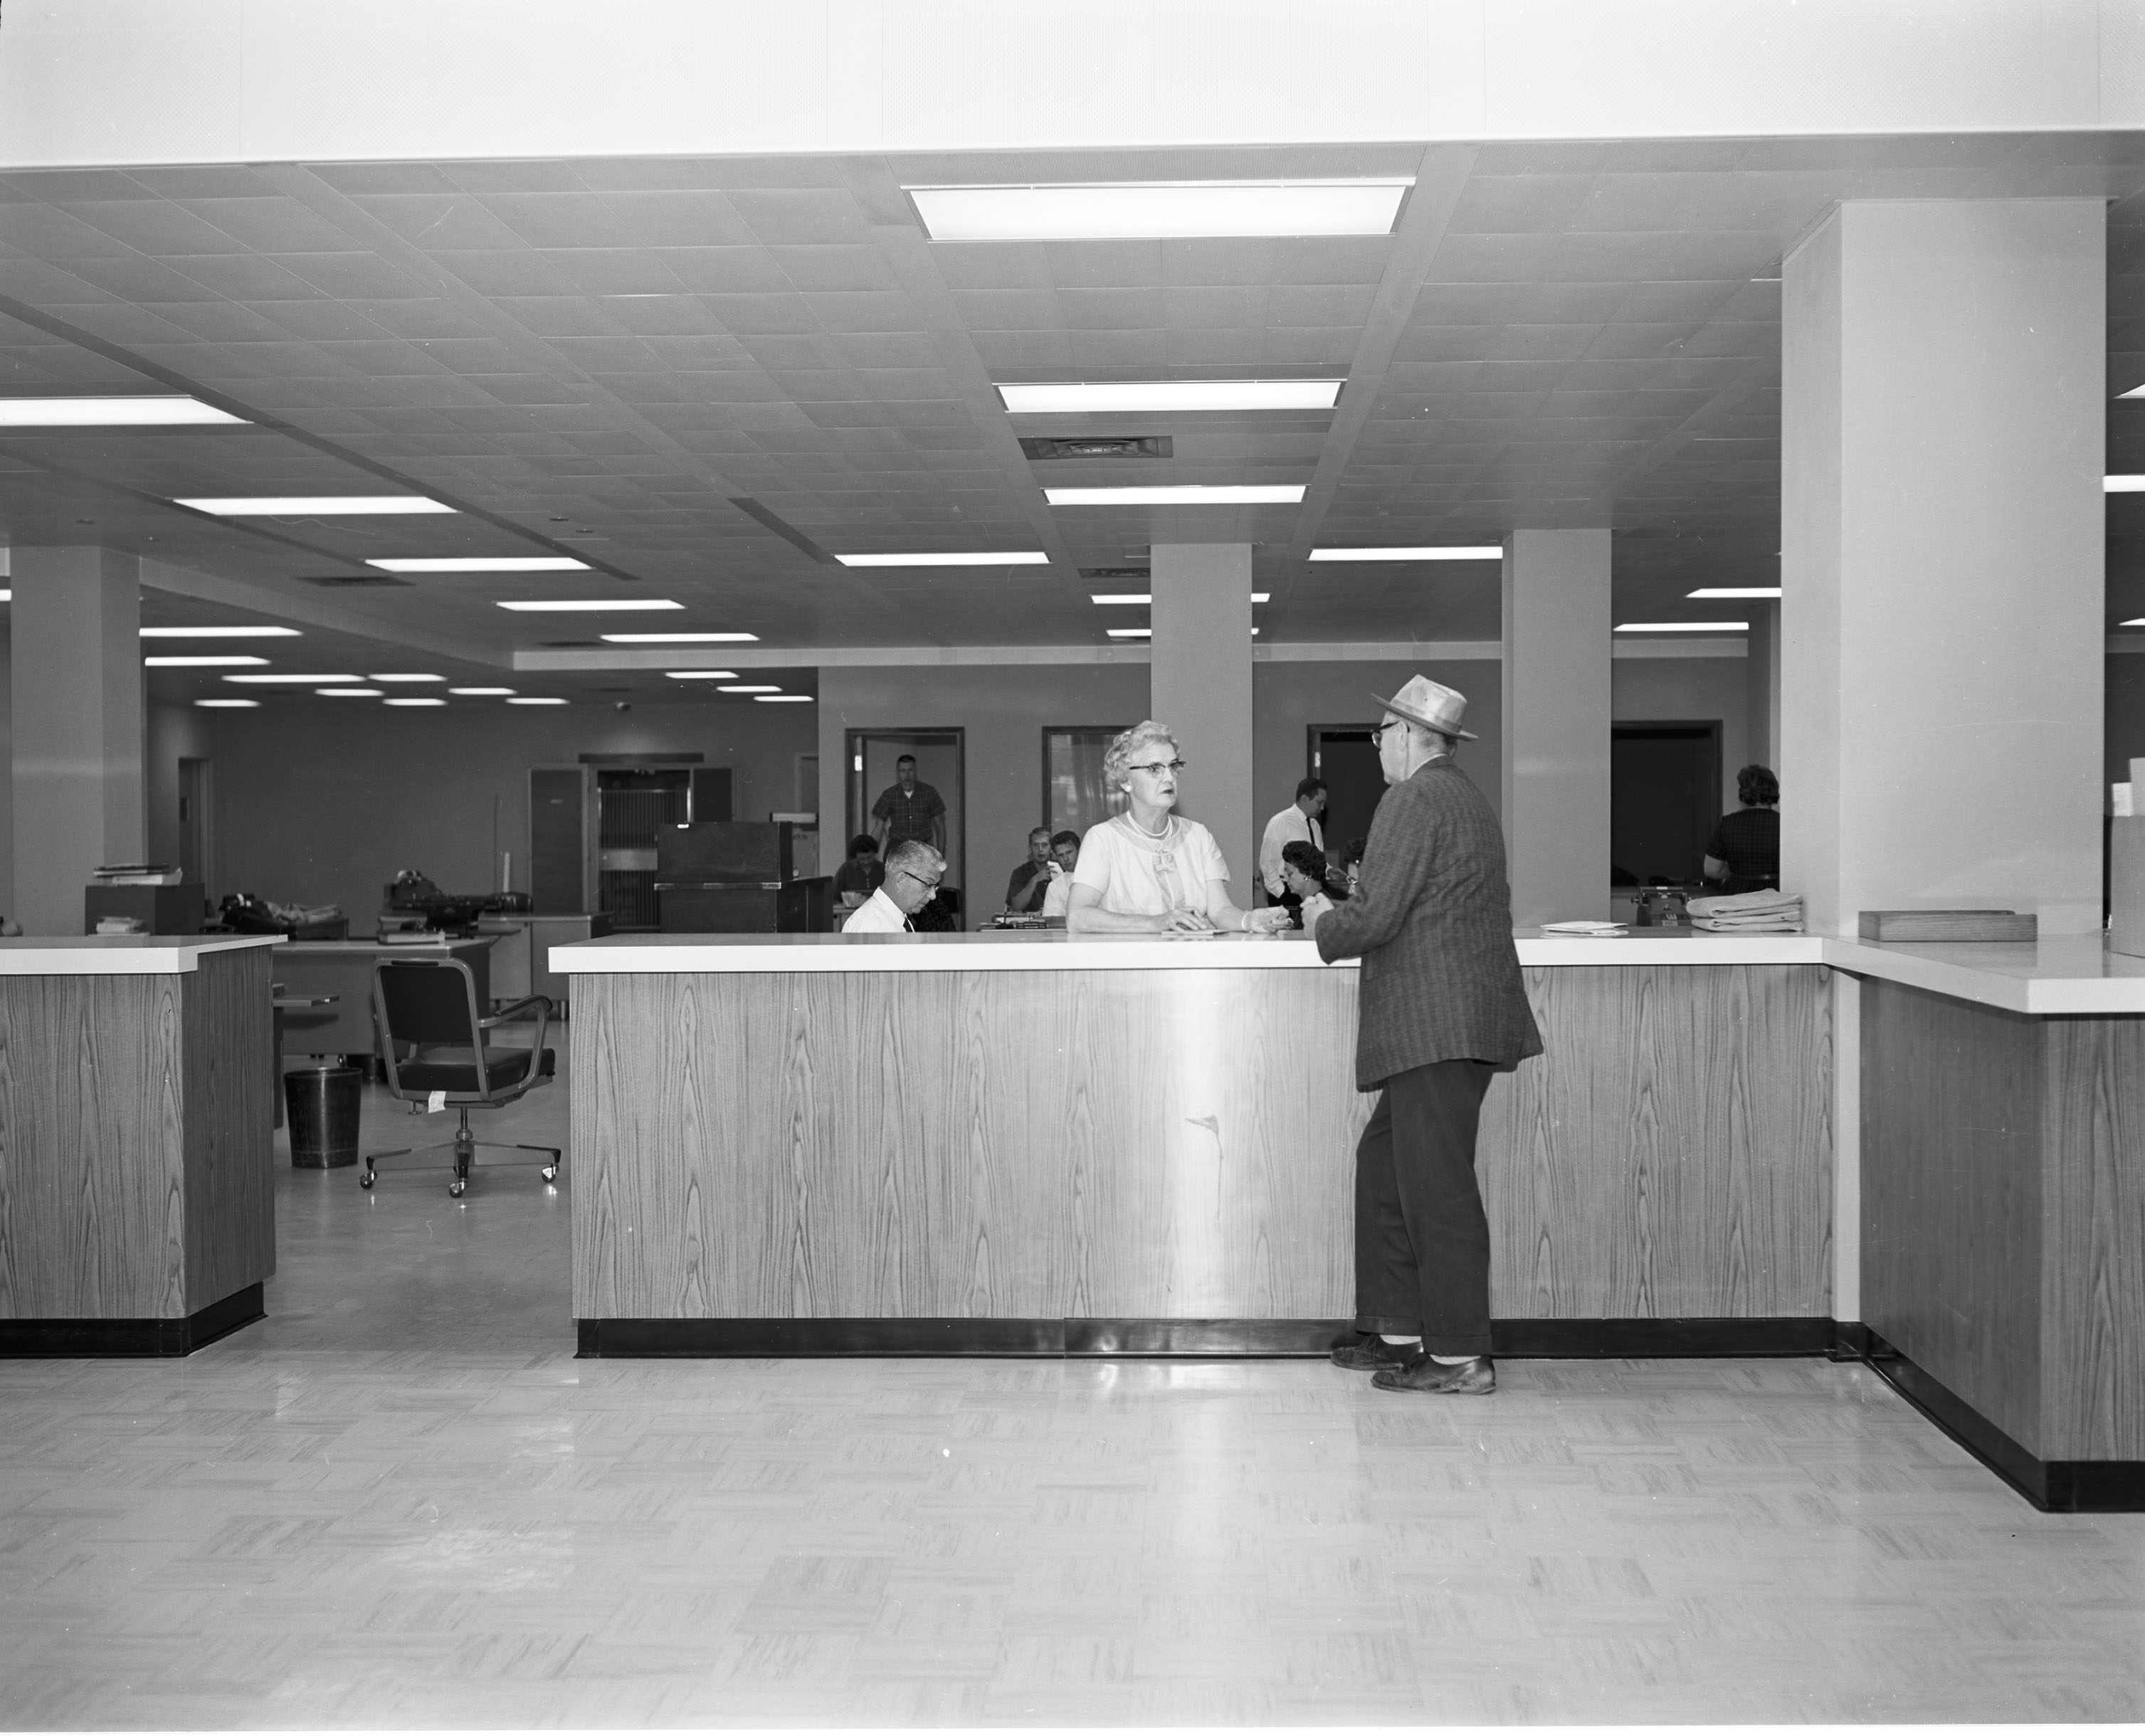 Customer service counter in Seattle Municipal Building, 1962